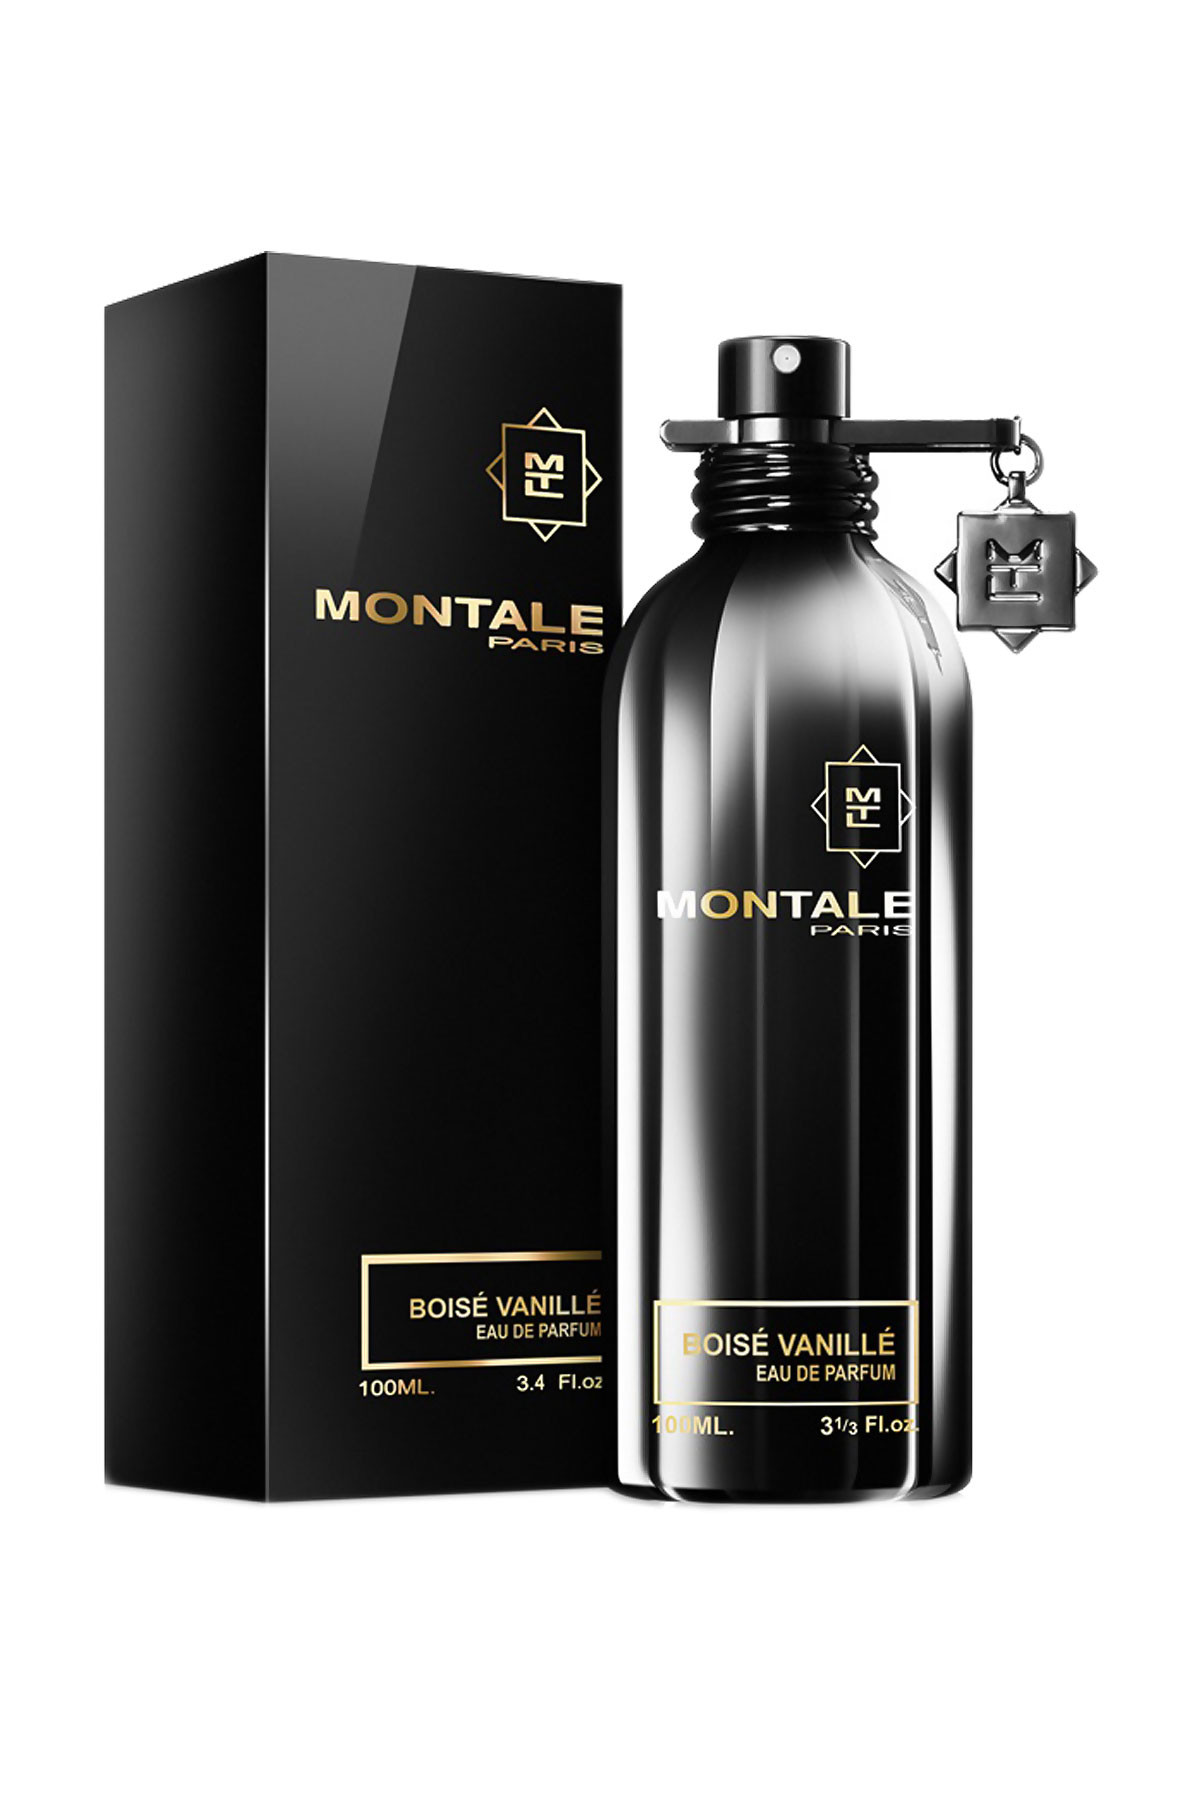 Montale perfume. Montale Paris духи мужские. Монтале Париж духи мужские. Духи Монталь Париж черные. Montale Black Aoud.